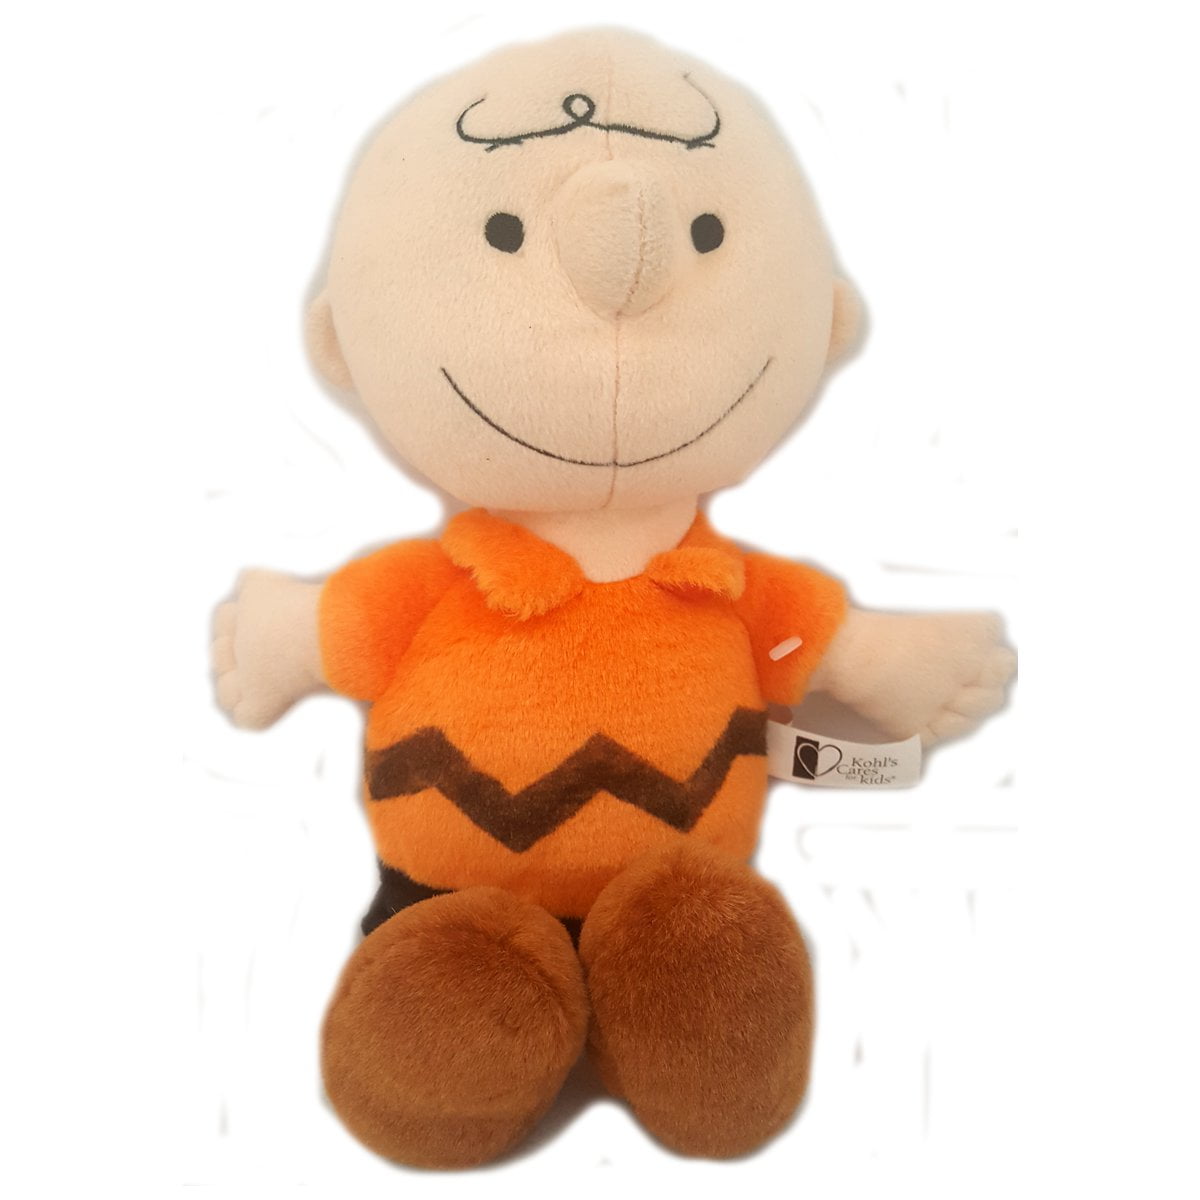 Peanuts Charlie Brown Plush Stuffed Animal Toy Kohl’s Cares 13” yellow black 